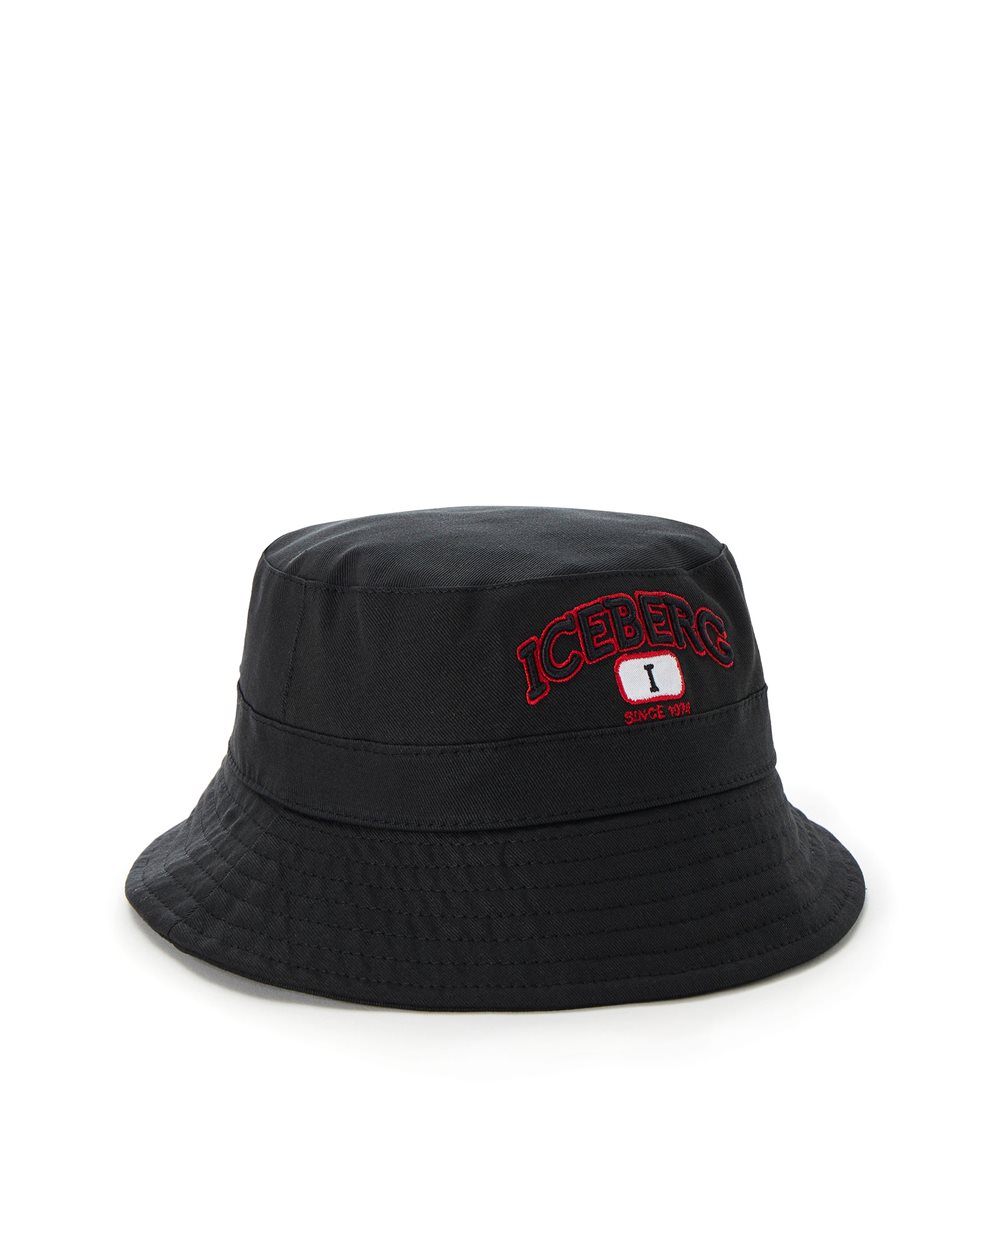 Bucket hat with logo -  ( SECONDO STEP DE ) PROMO SALDI UP TO 50% | Iceberg - Official Website